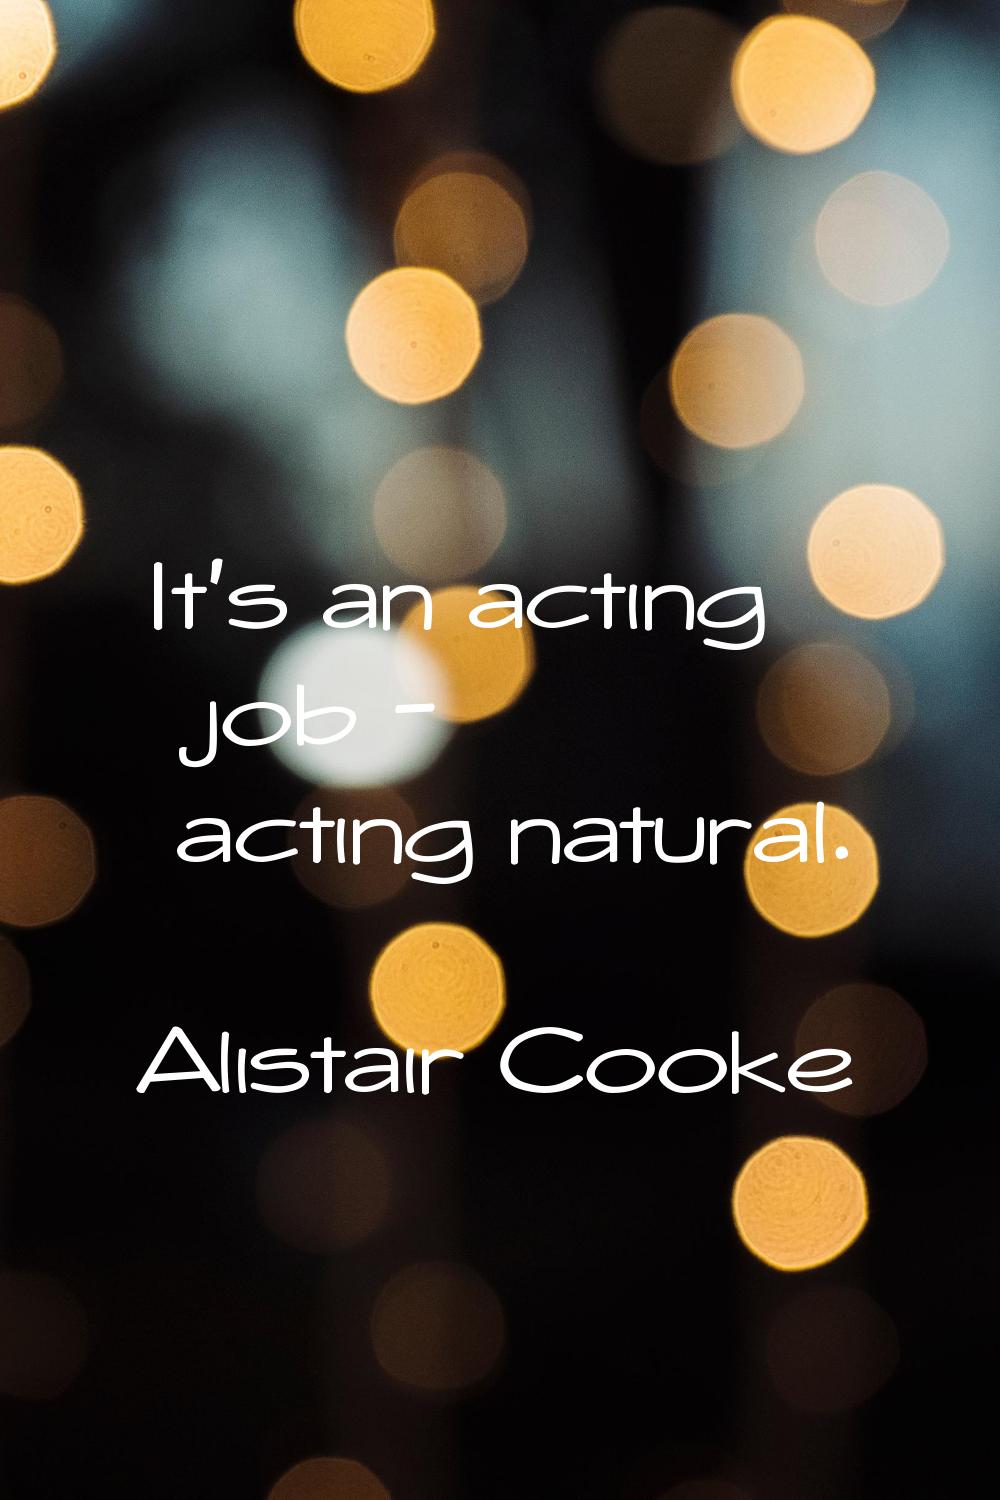 It's an acting job - acting natural.